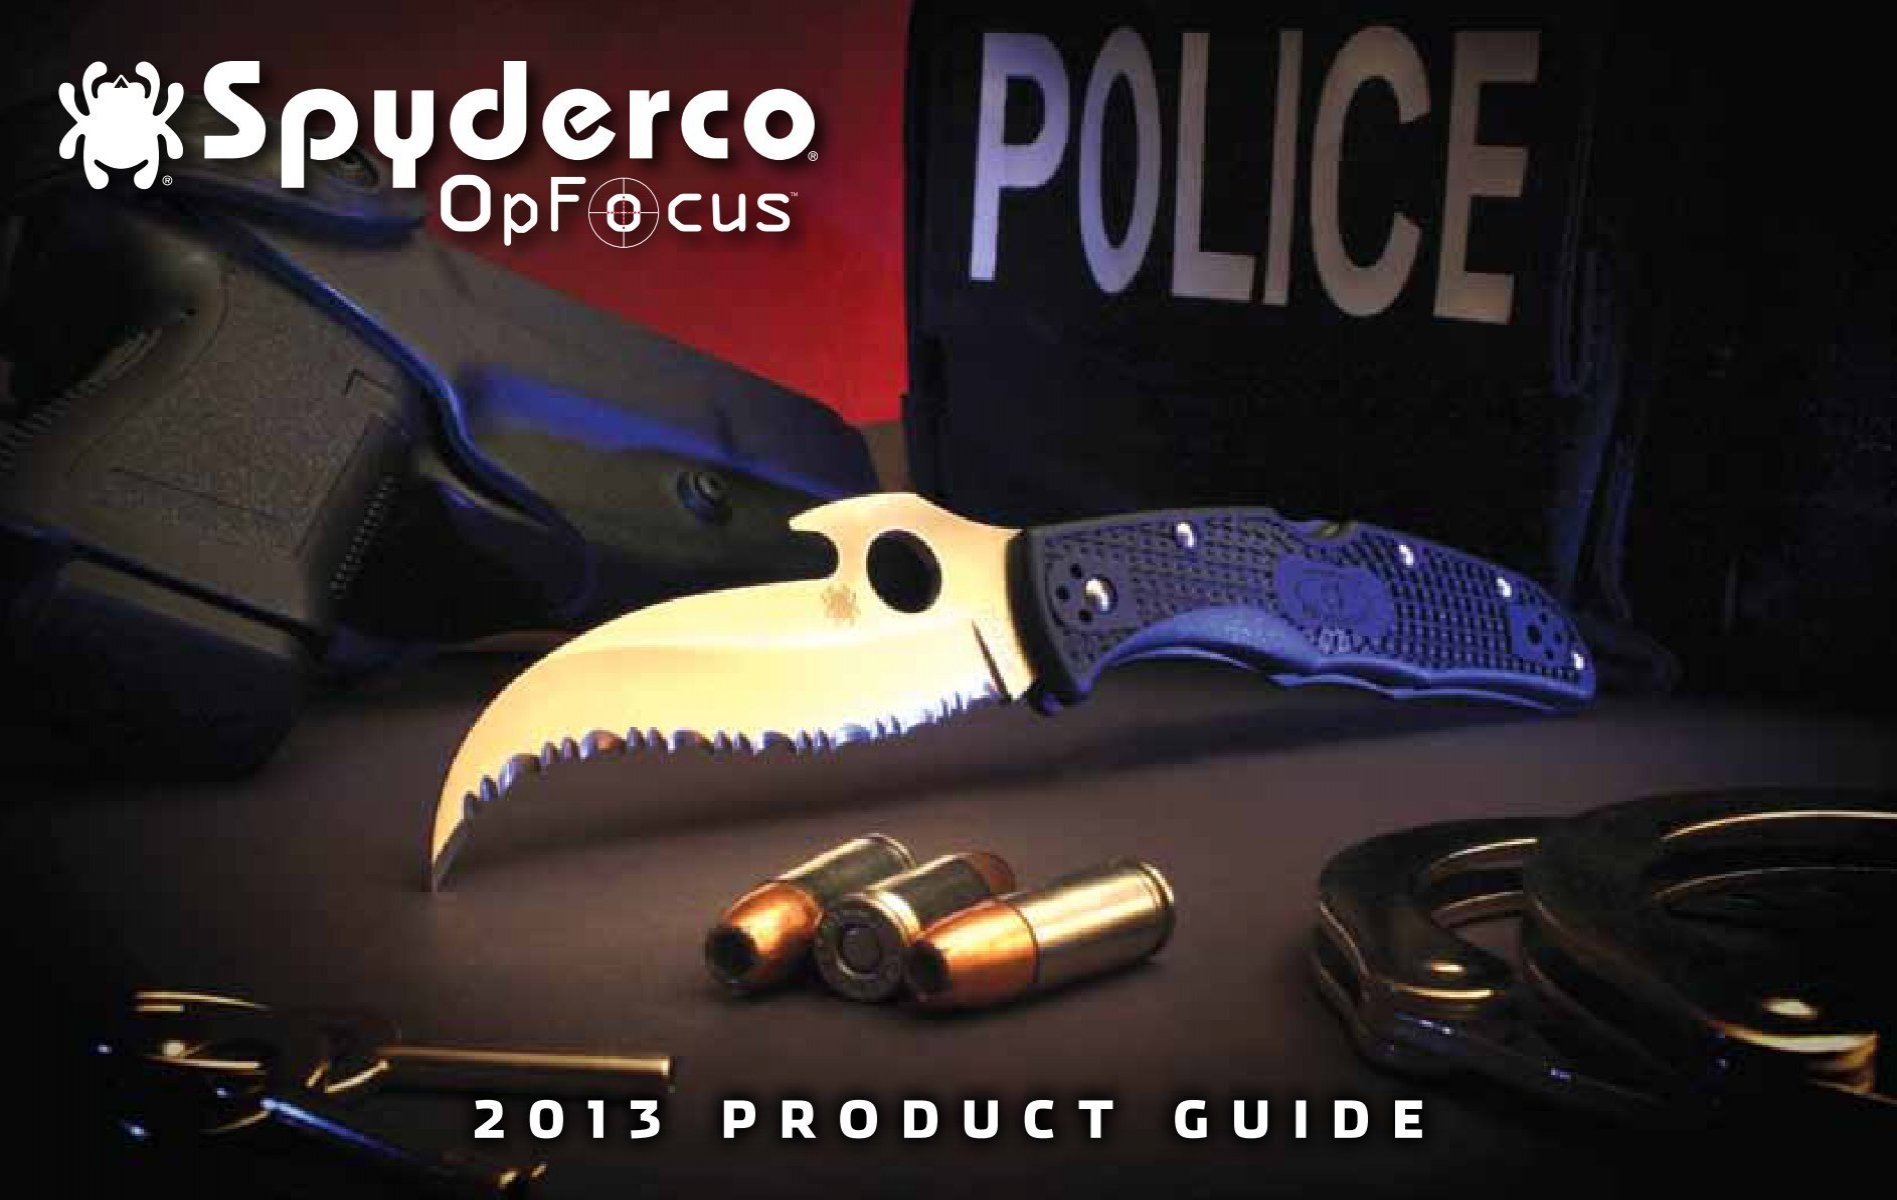 OpFocus Product Guide - Spyderco